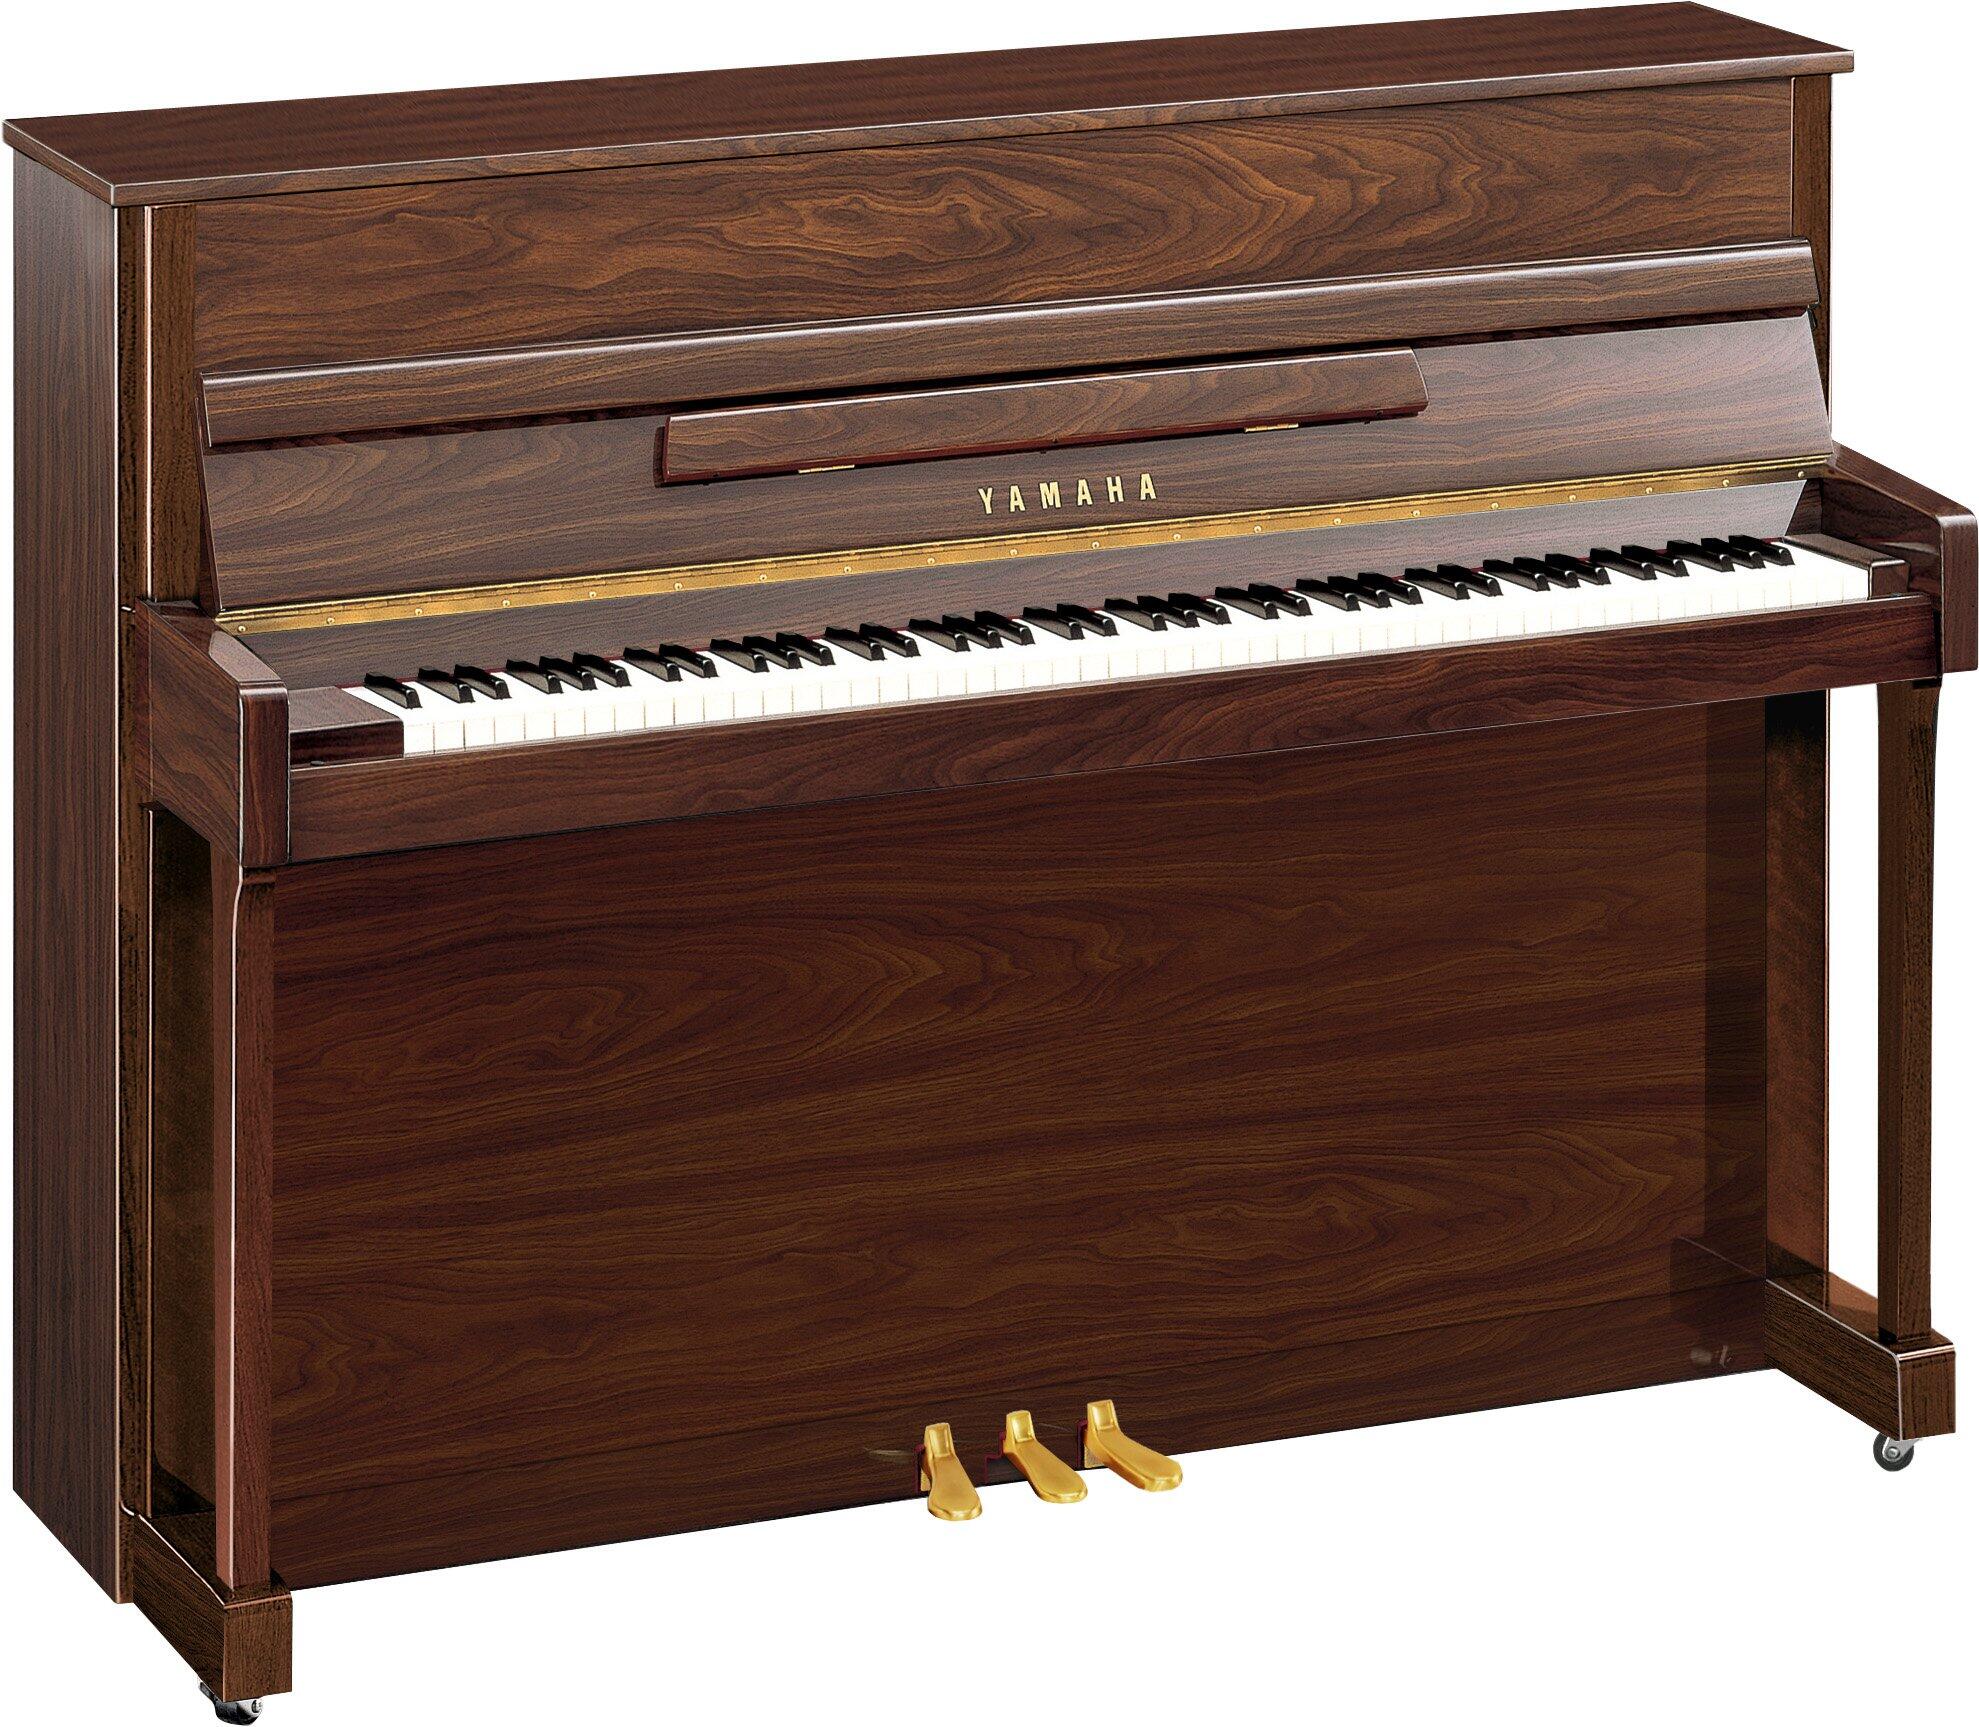 Yamaha Pianos Acoustic B2 PW Walnuss poliert-glänzend 113 cm : photo 1